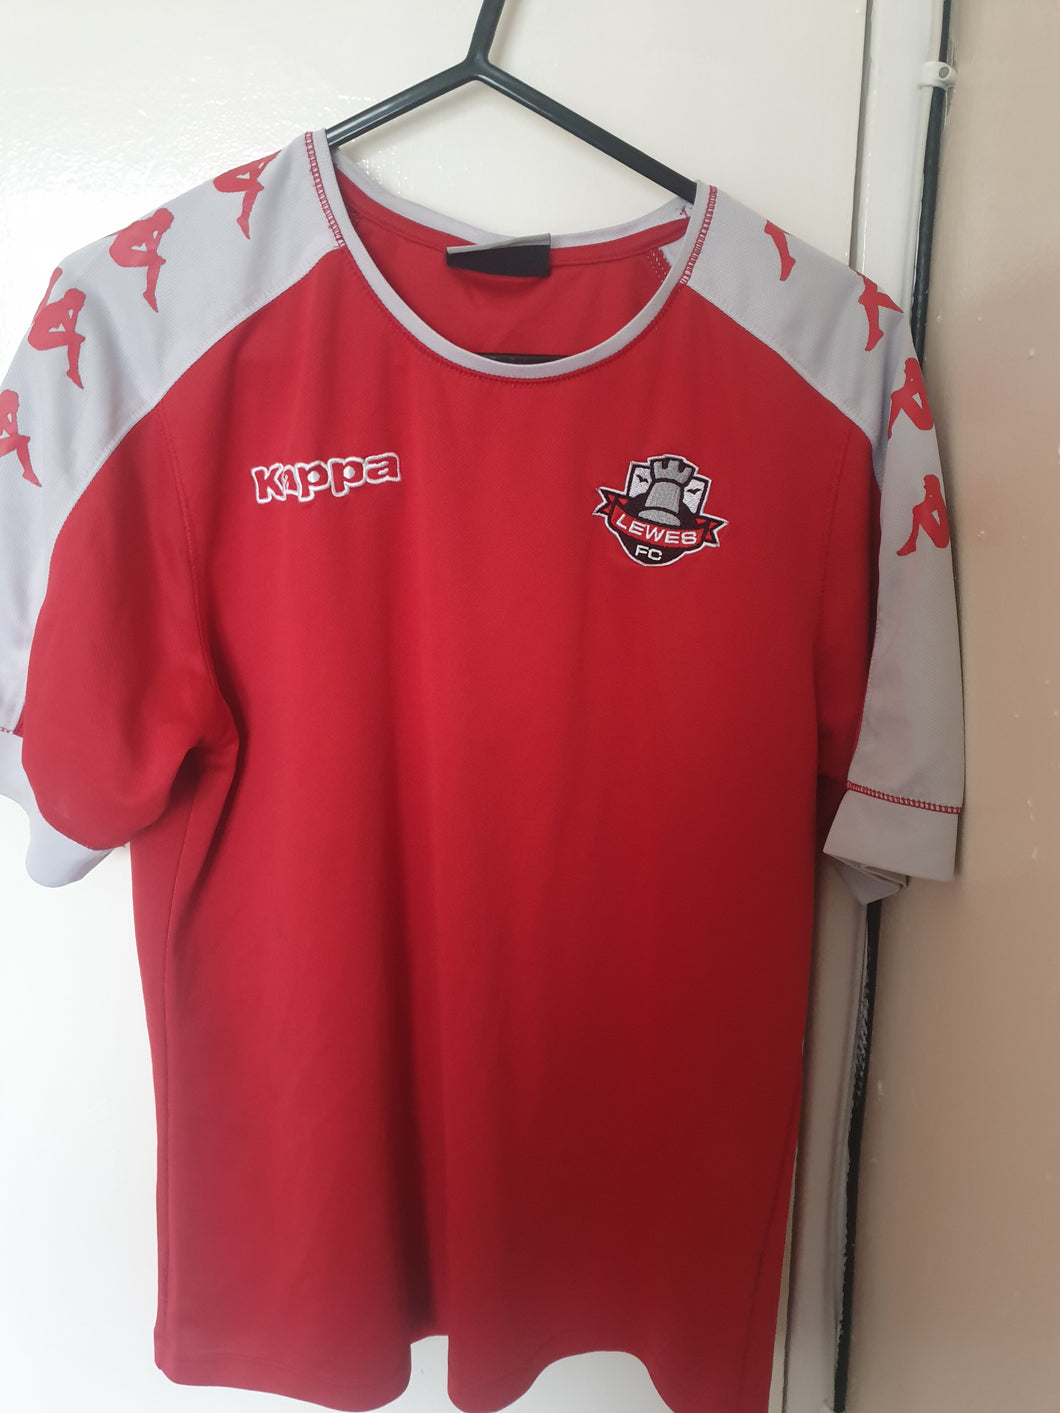 Lewes Fc Kappa Training Football Shirt (Size Small)